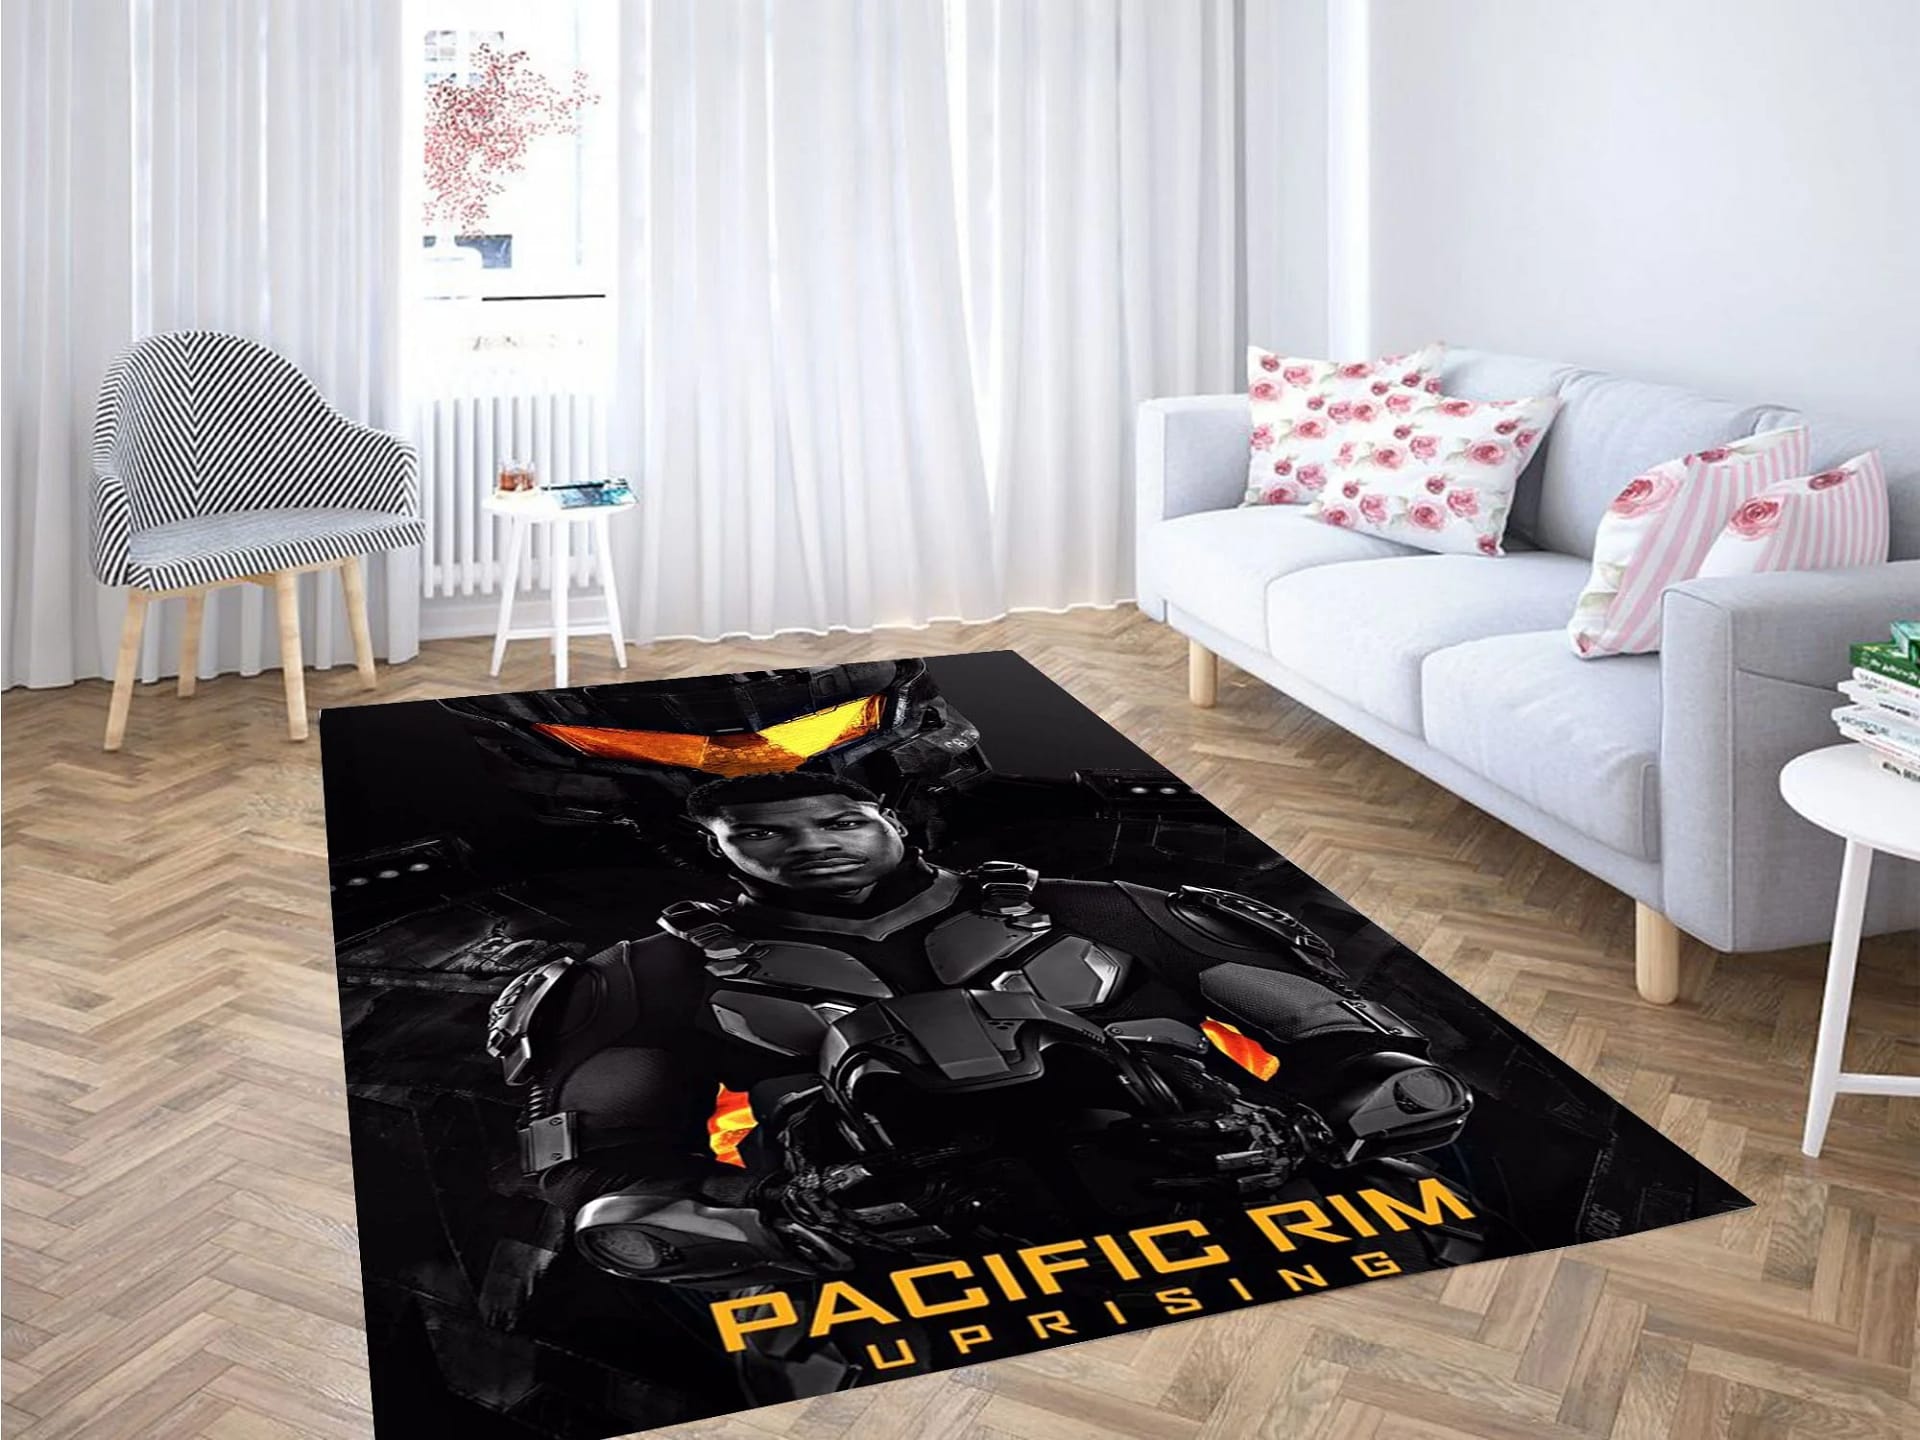 John Boyega Pacific Rim 2 Carpet Rug